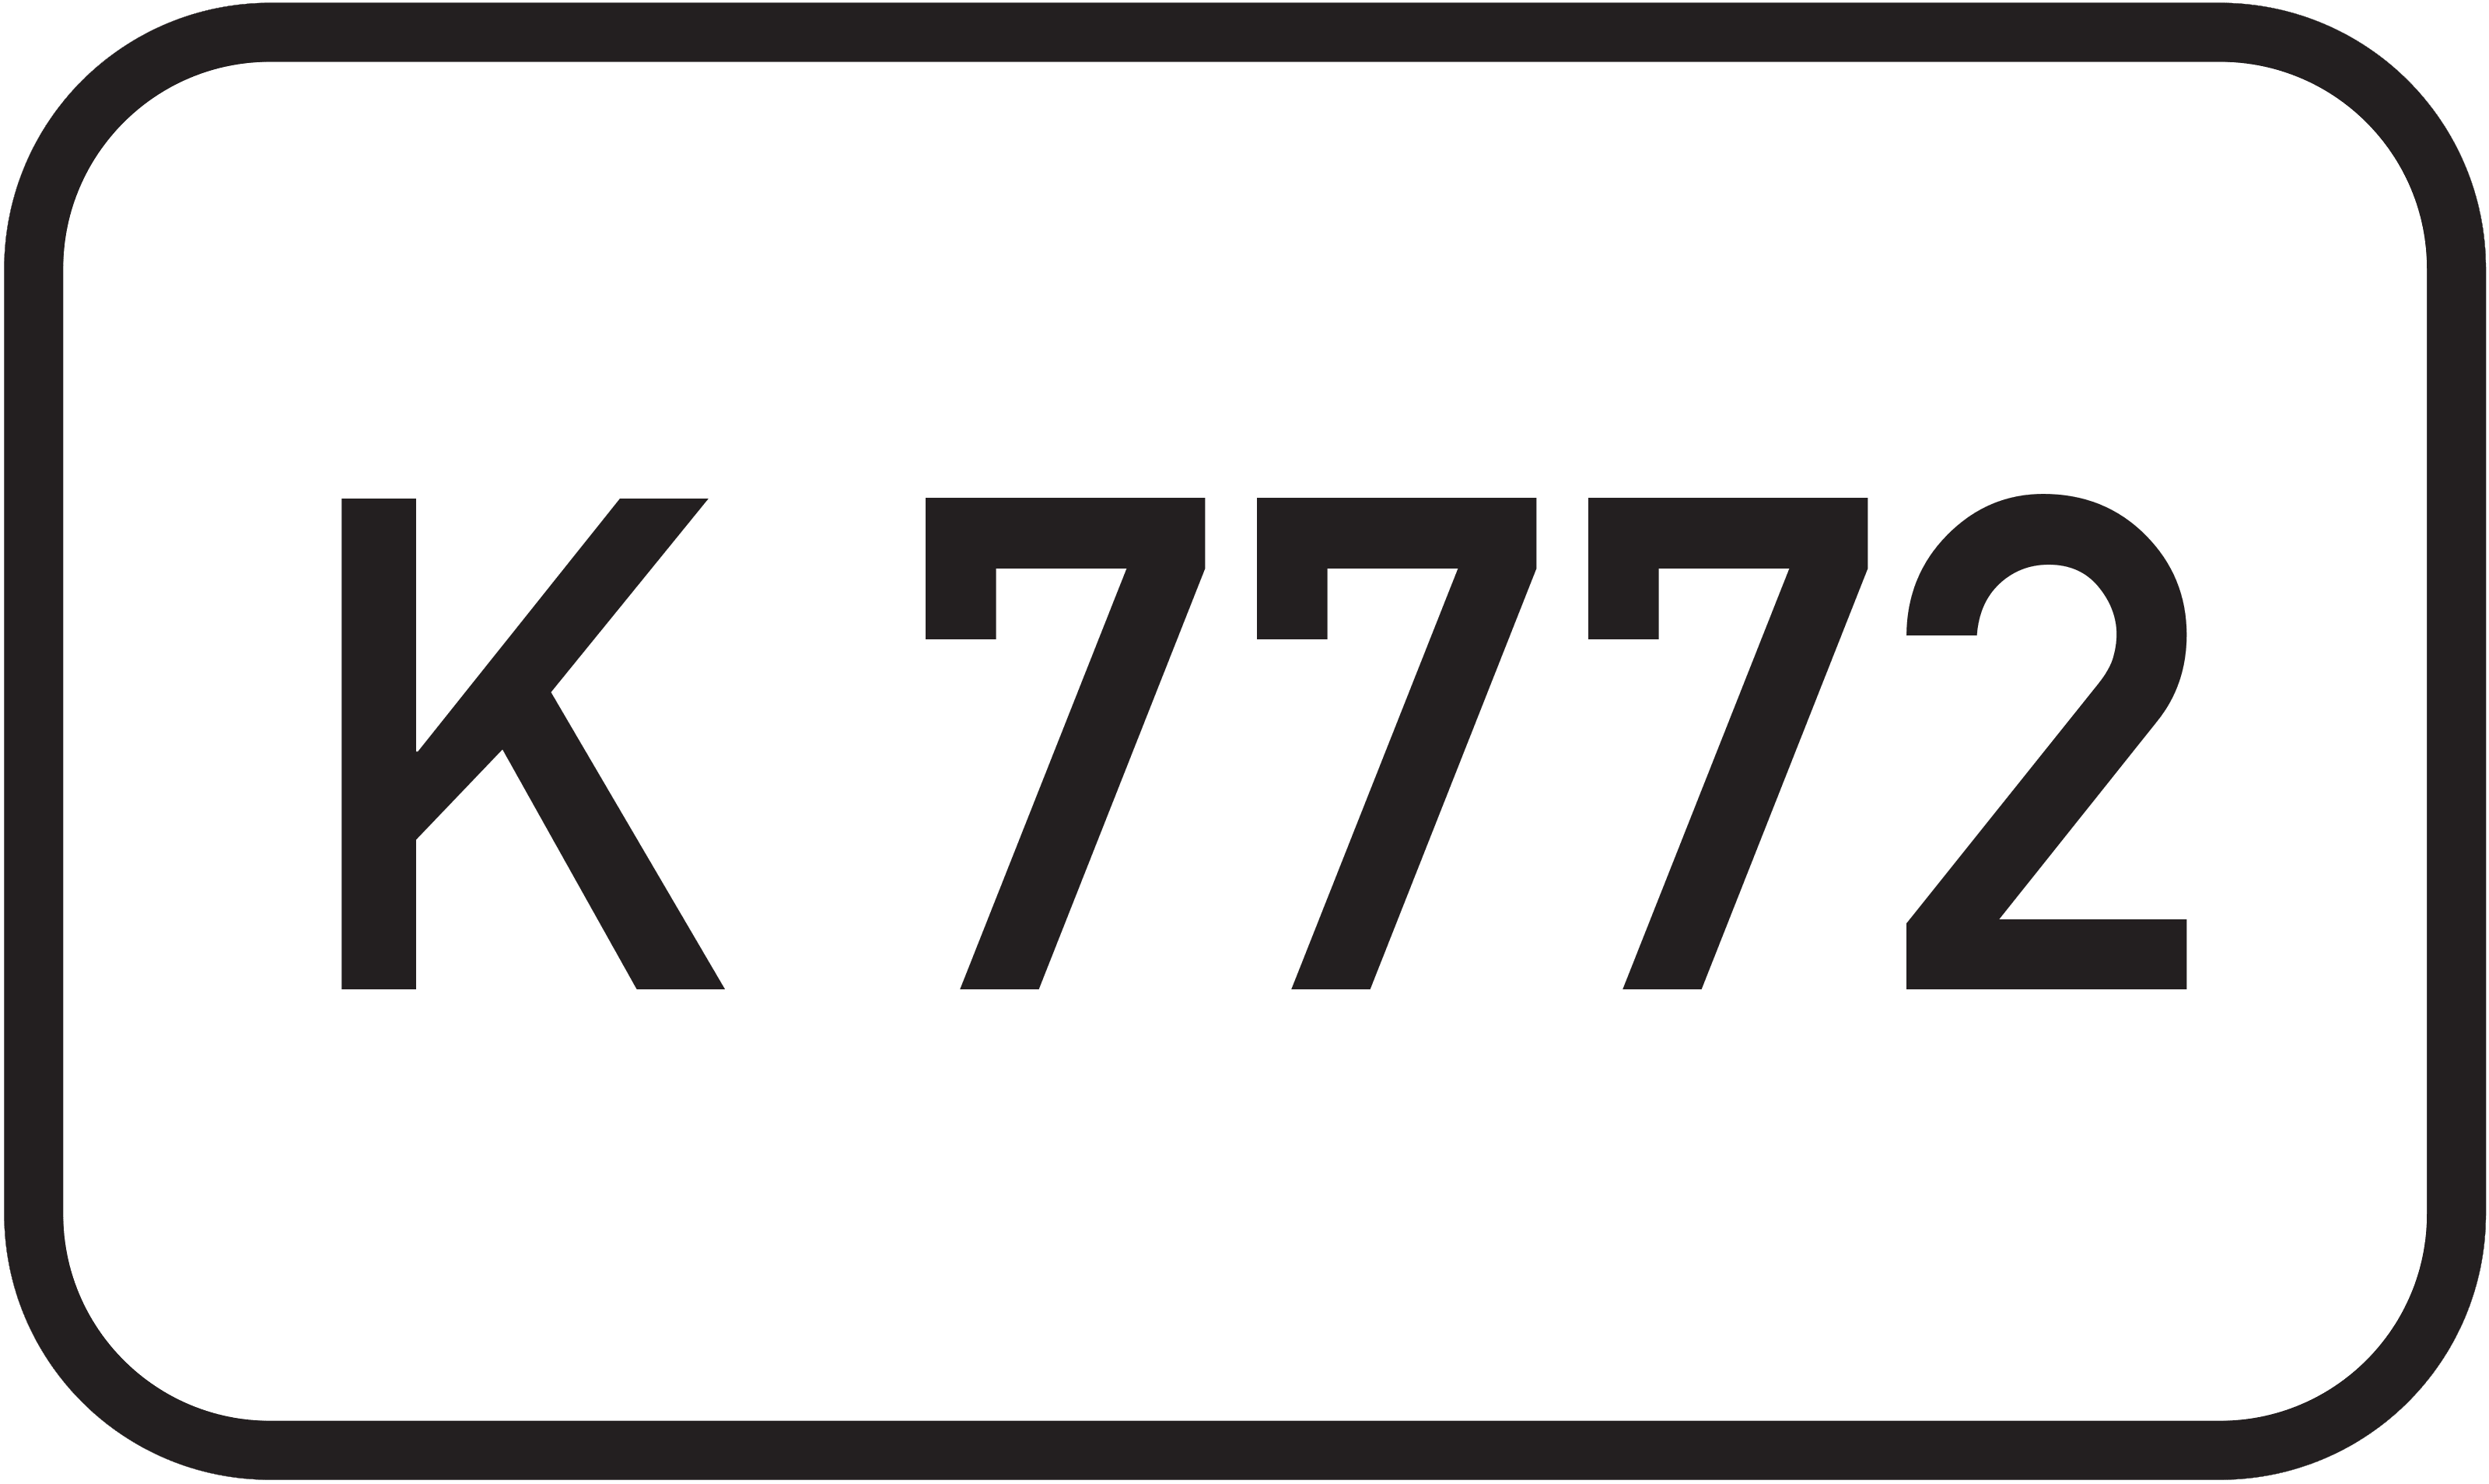 Straßenschild Kreisstraße K 7772